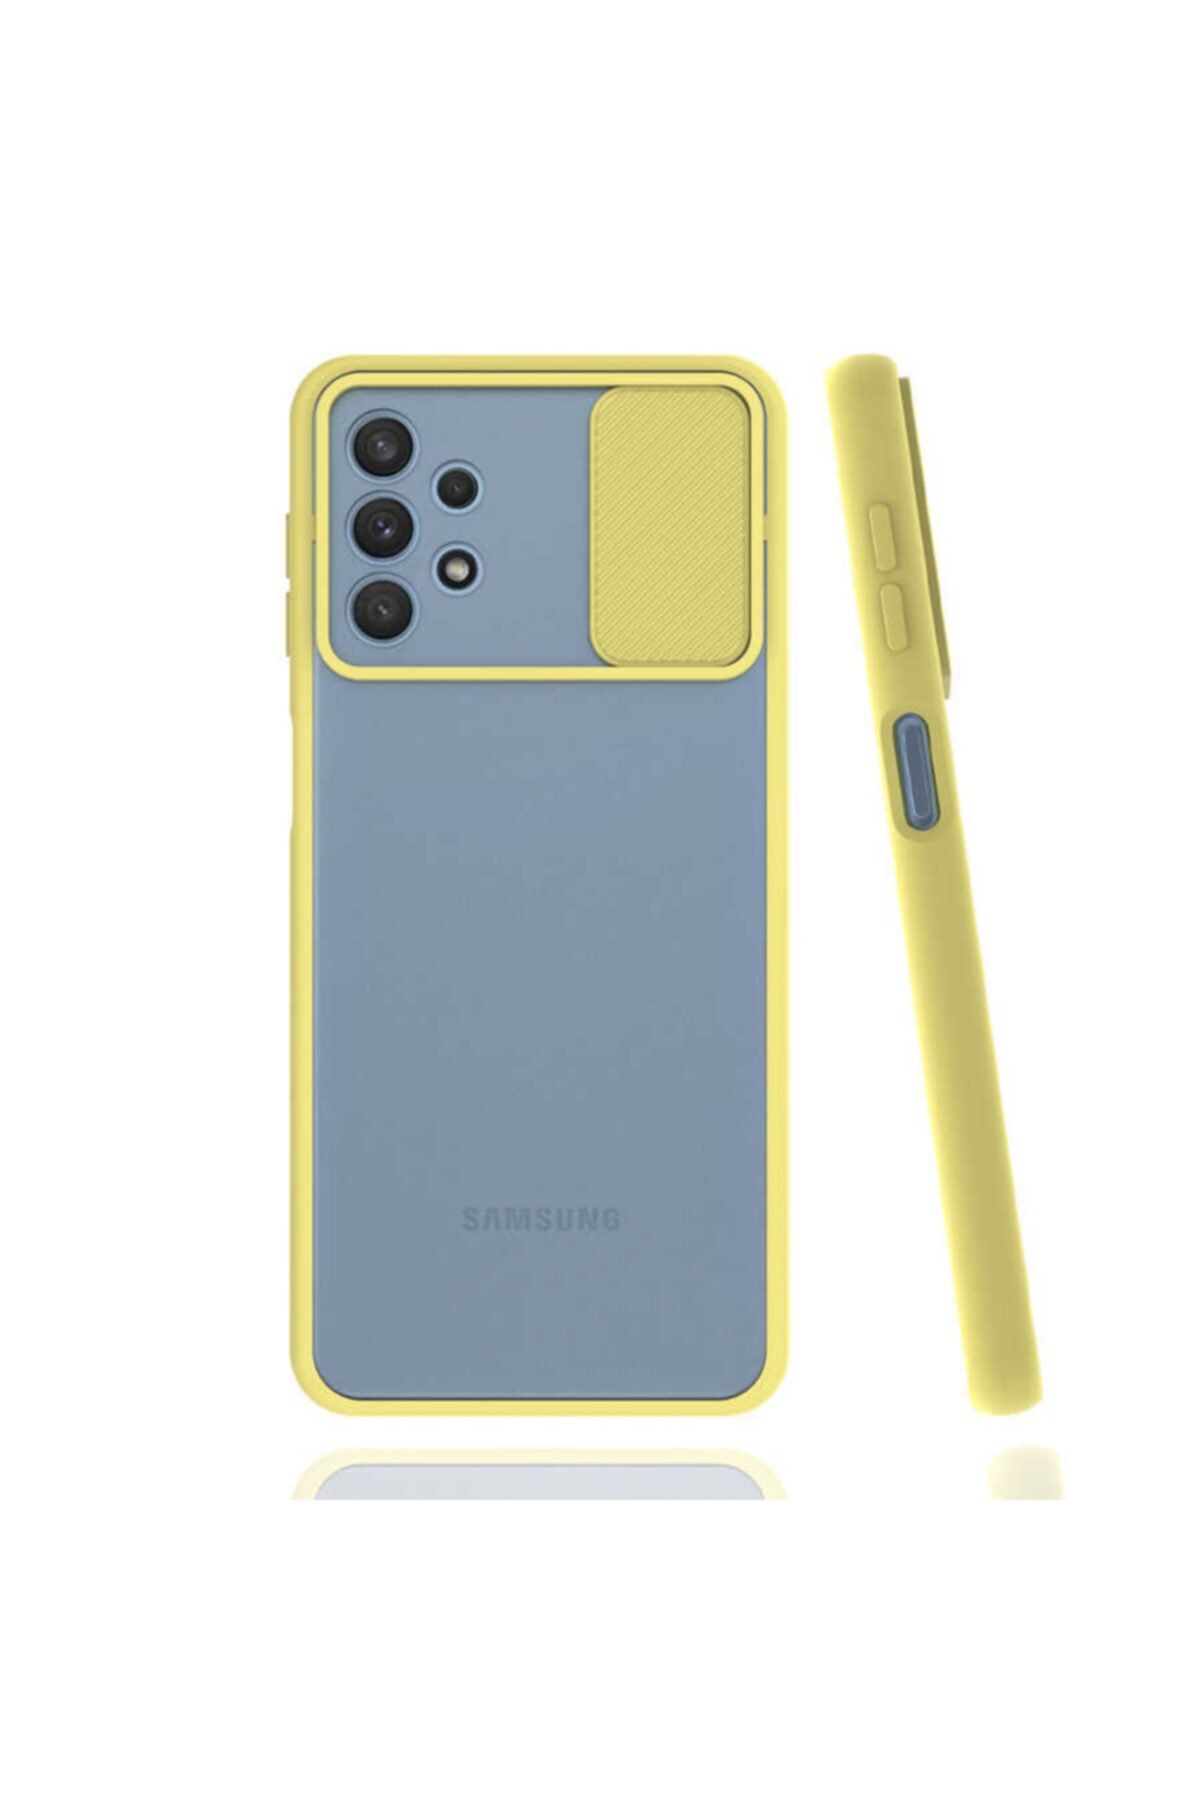 Samsung Cover Station Galaxy A32 4g Kılıf Slayt Kaydırmalı Kılıf Kamera Korumalı Renkli Silikon Lensi Kılıf